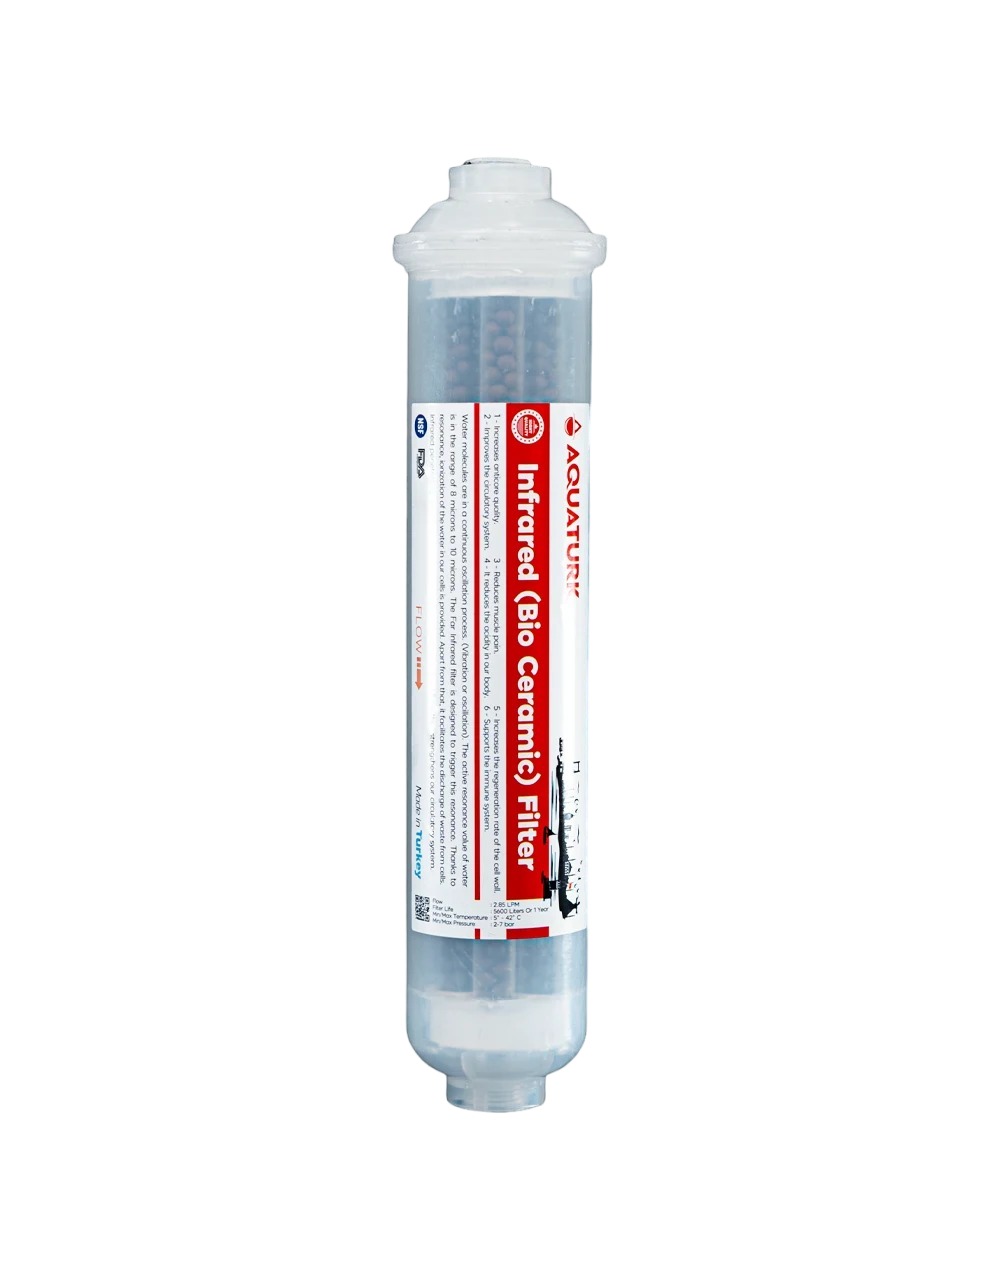 AquaTurk Infrared Water Filter Cartridge